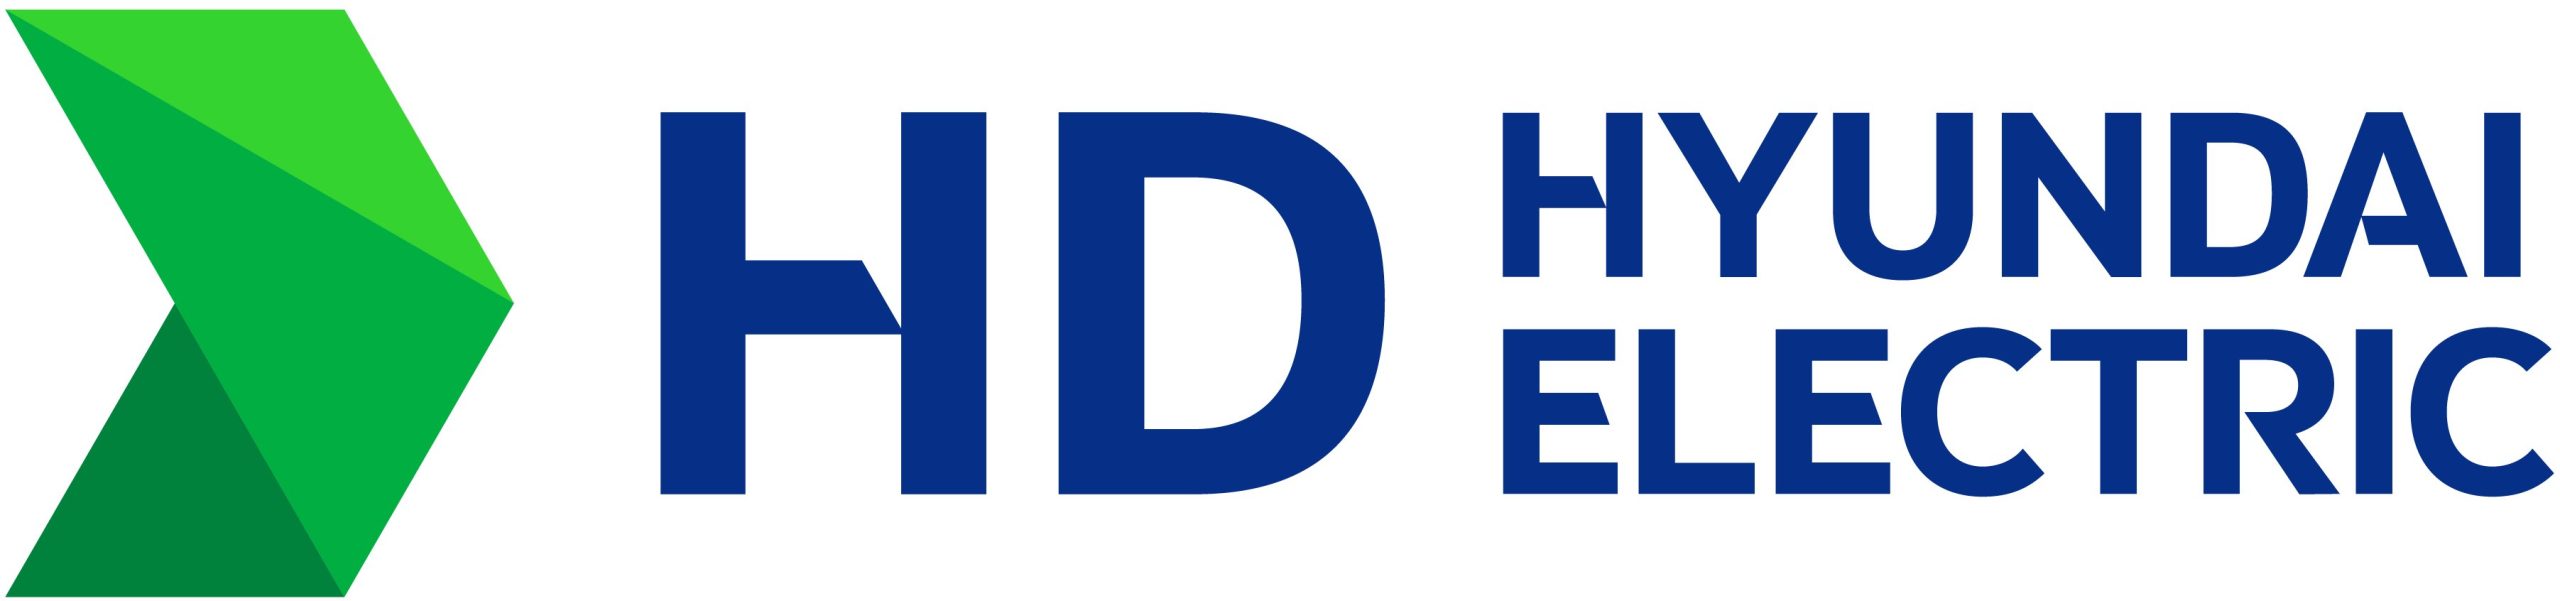 logo hyundai electric